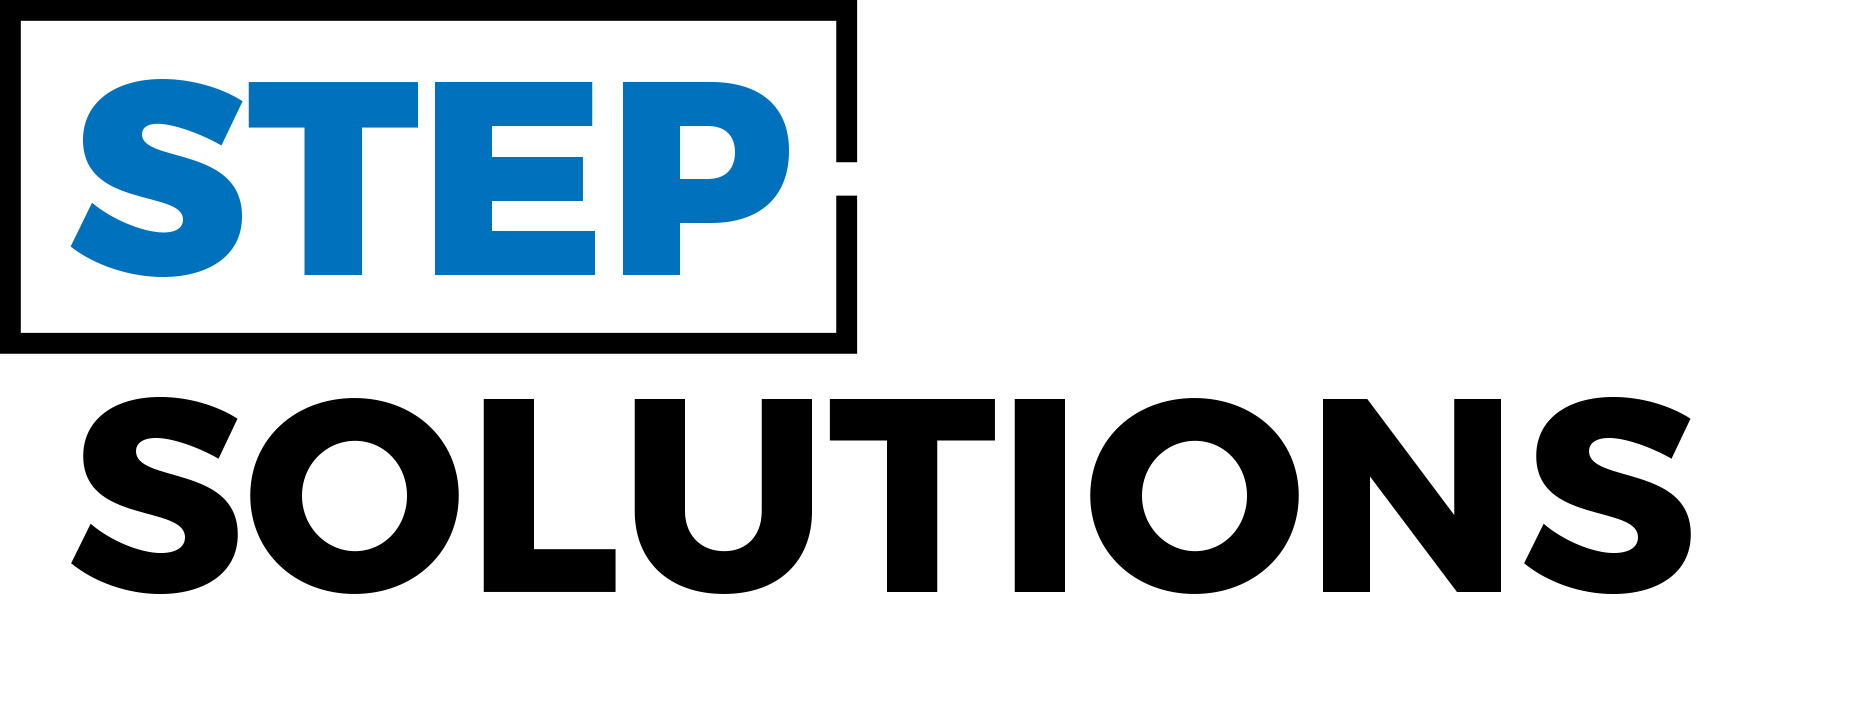 Step Solutions Co.,Ltd.